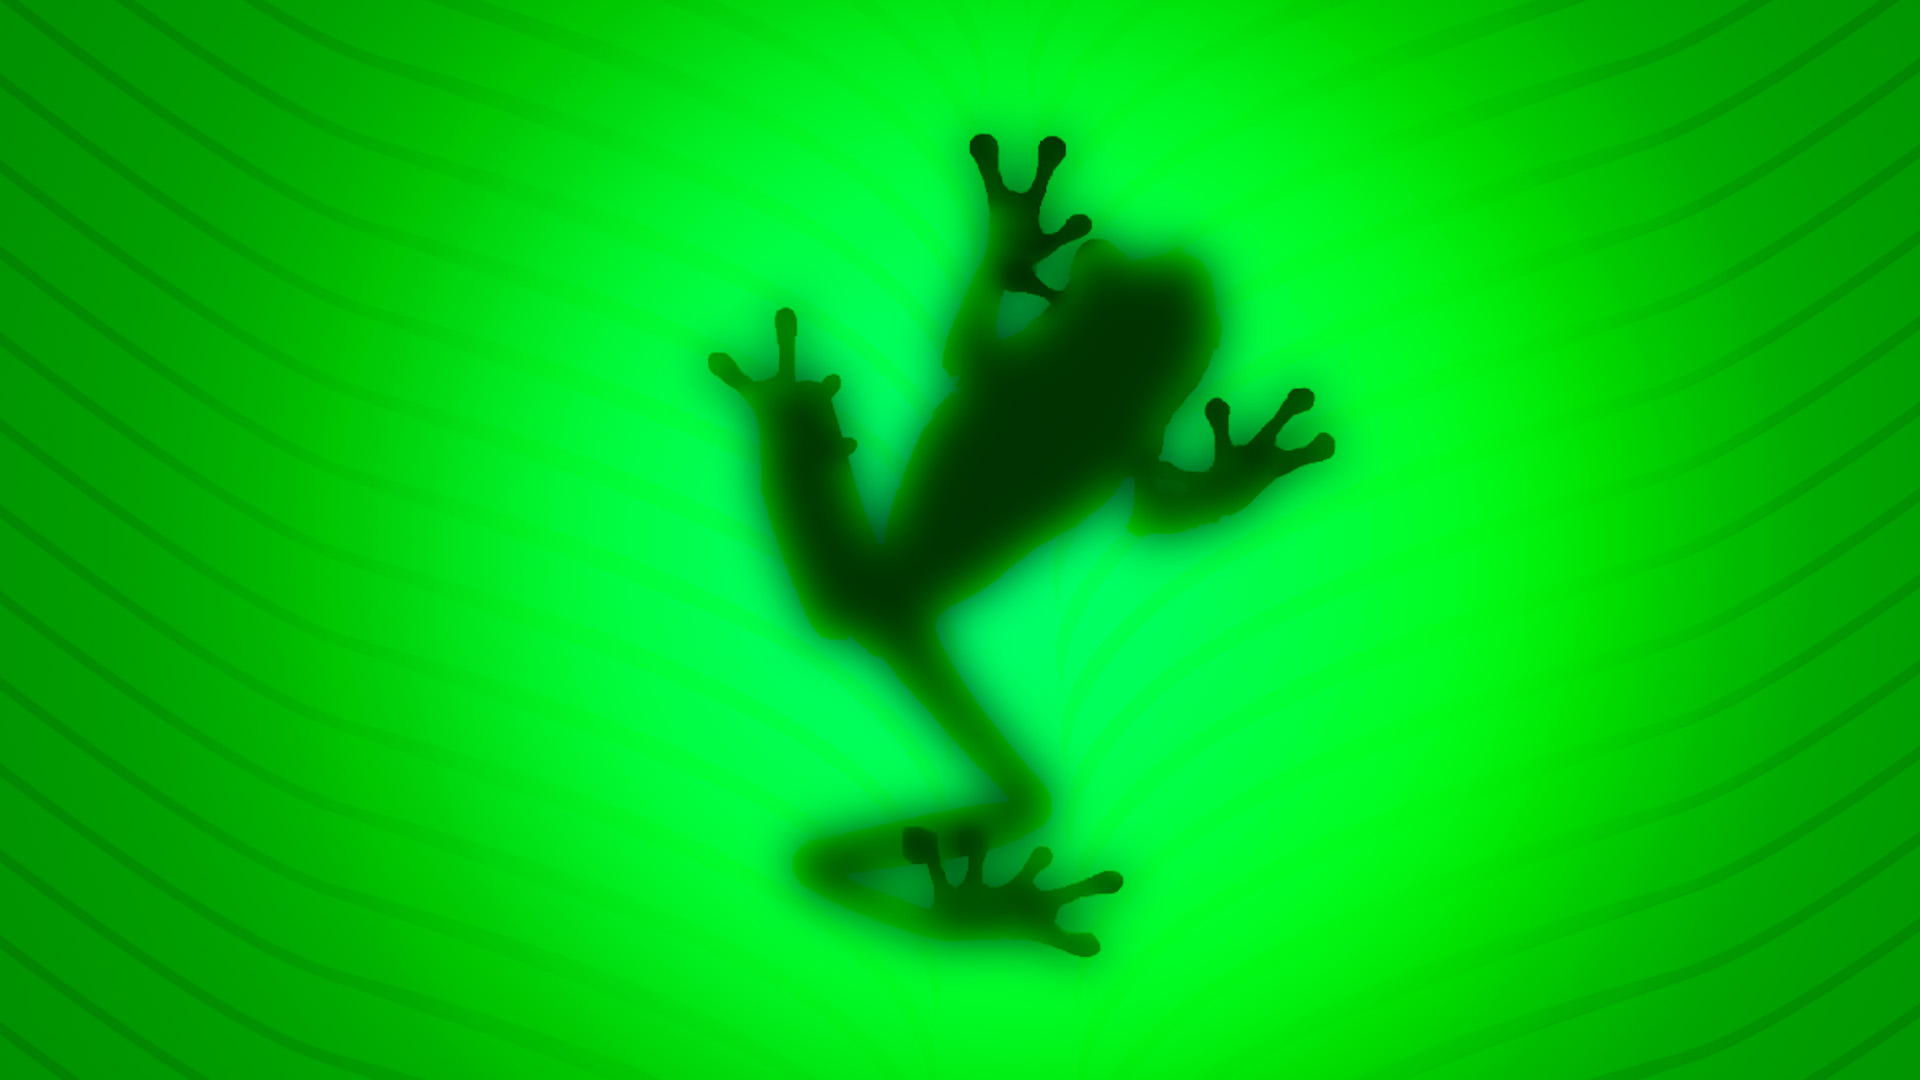 Frog wallpaper 157545 1920x1080